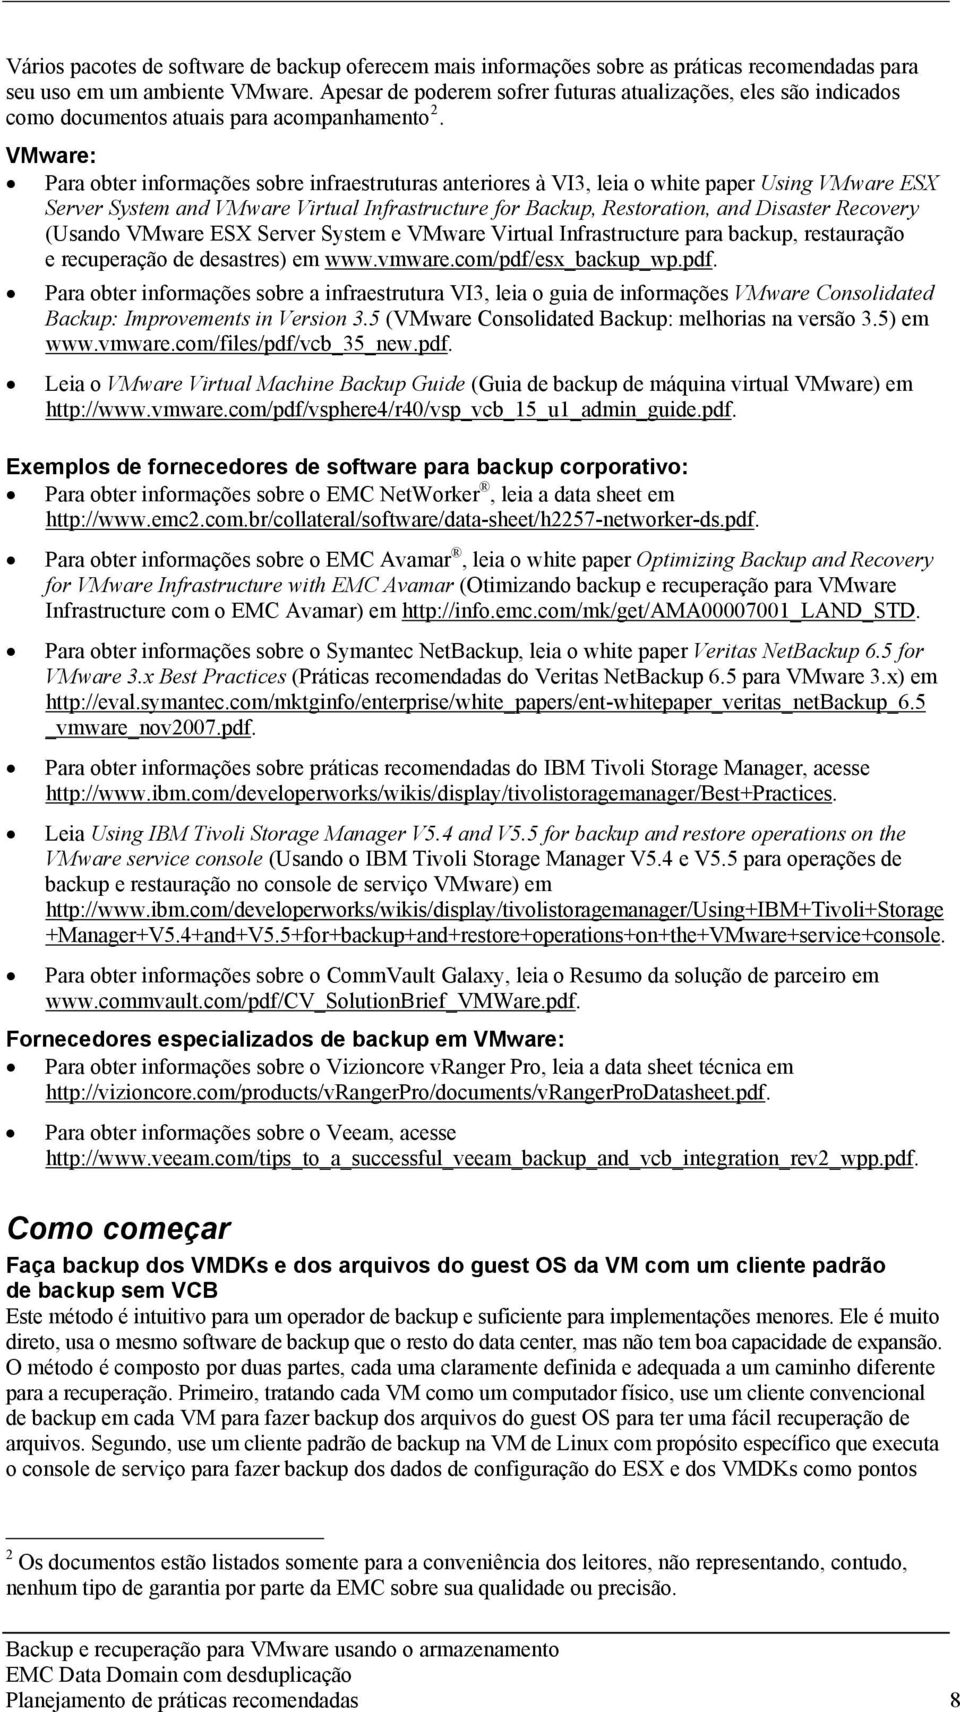 VMware: Para obter informações sobre infraestruturas anteriores à VI3, leia o white paper Using VMware ESX Server System and VMware Virtual Infrastructure for Backup, Restoration, and Disaster